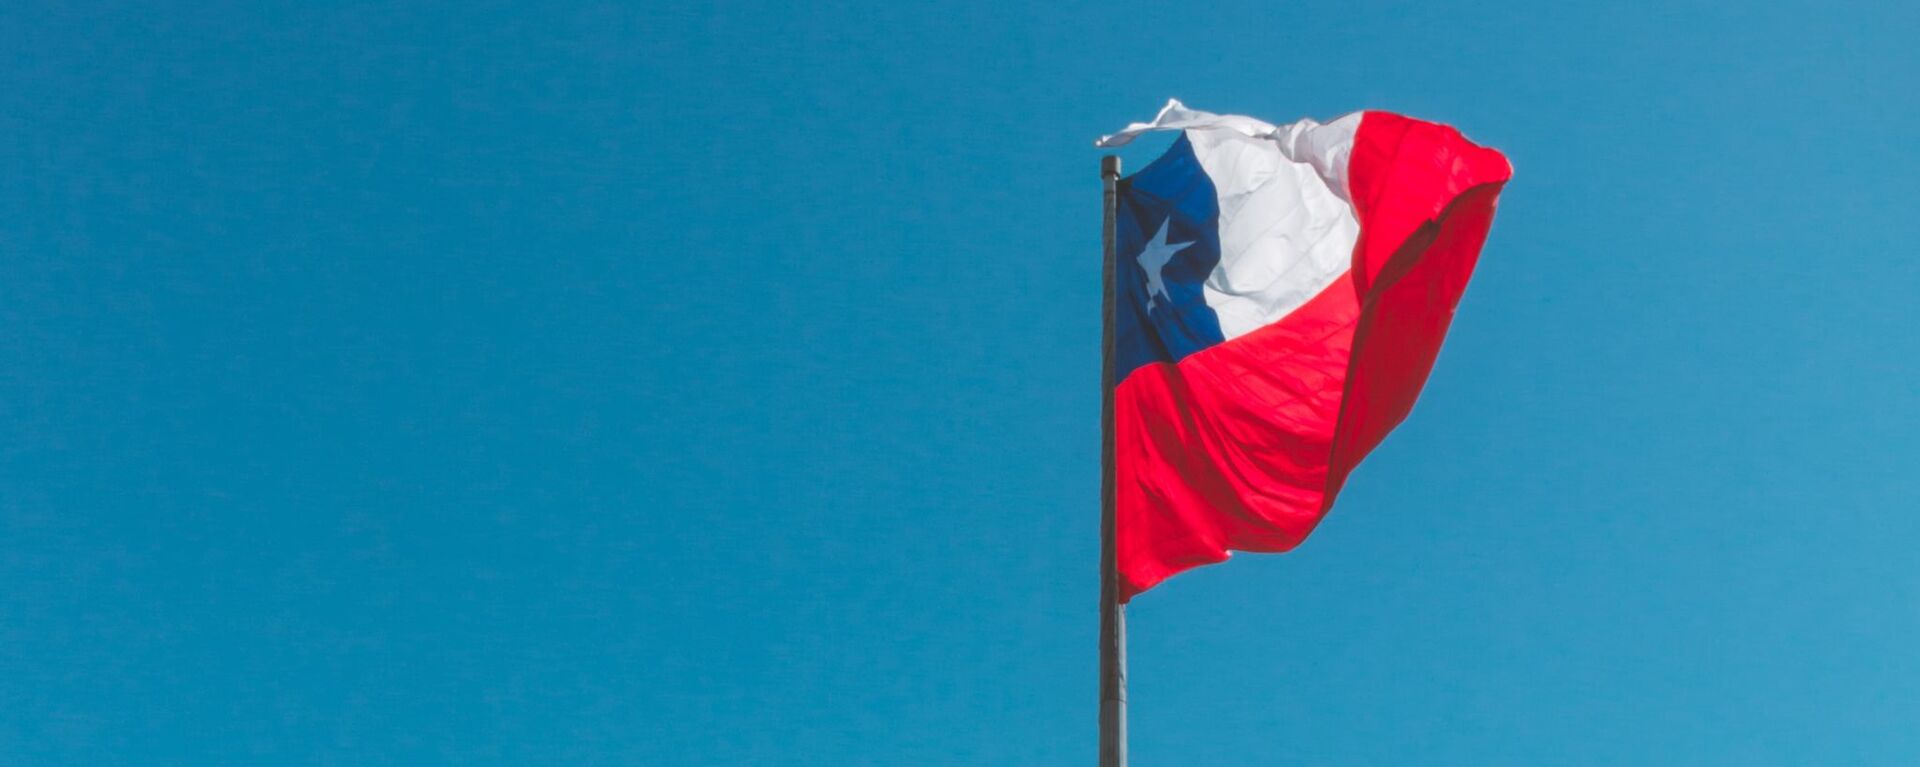 La bandera de Chile - Sputnik Mundo, 1920, 18.06.2021